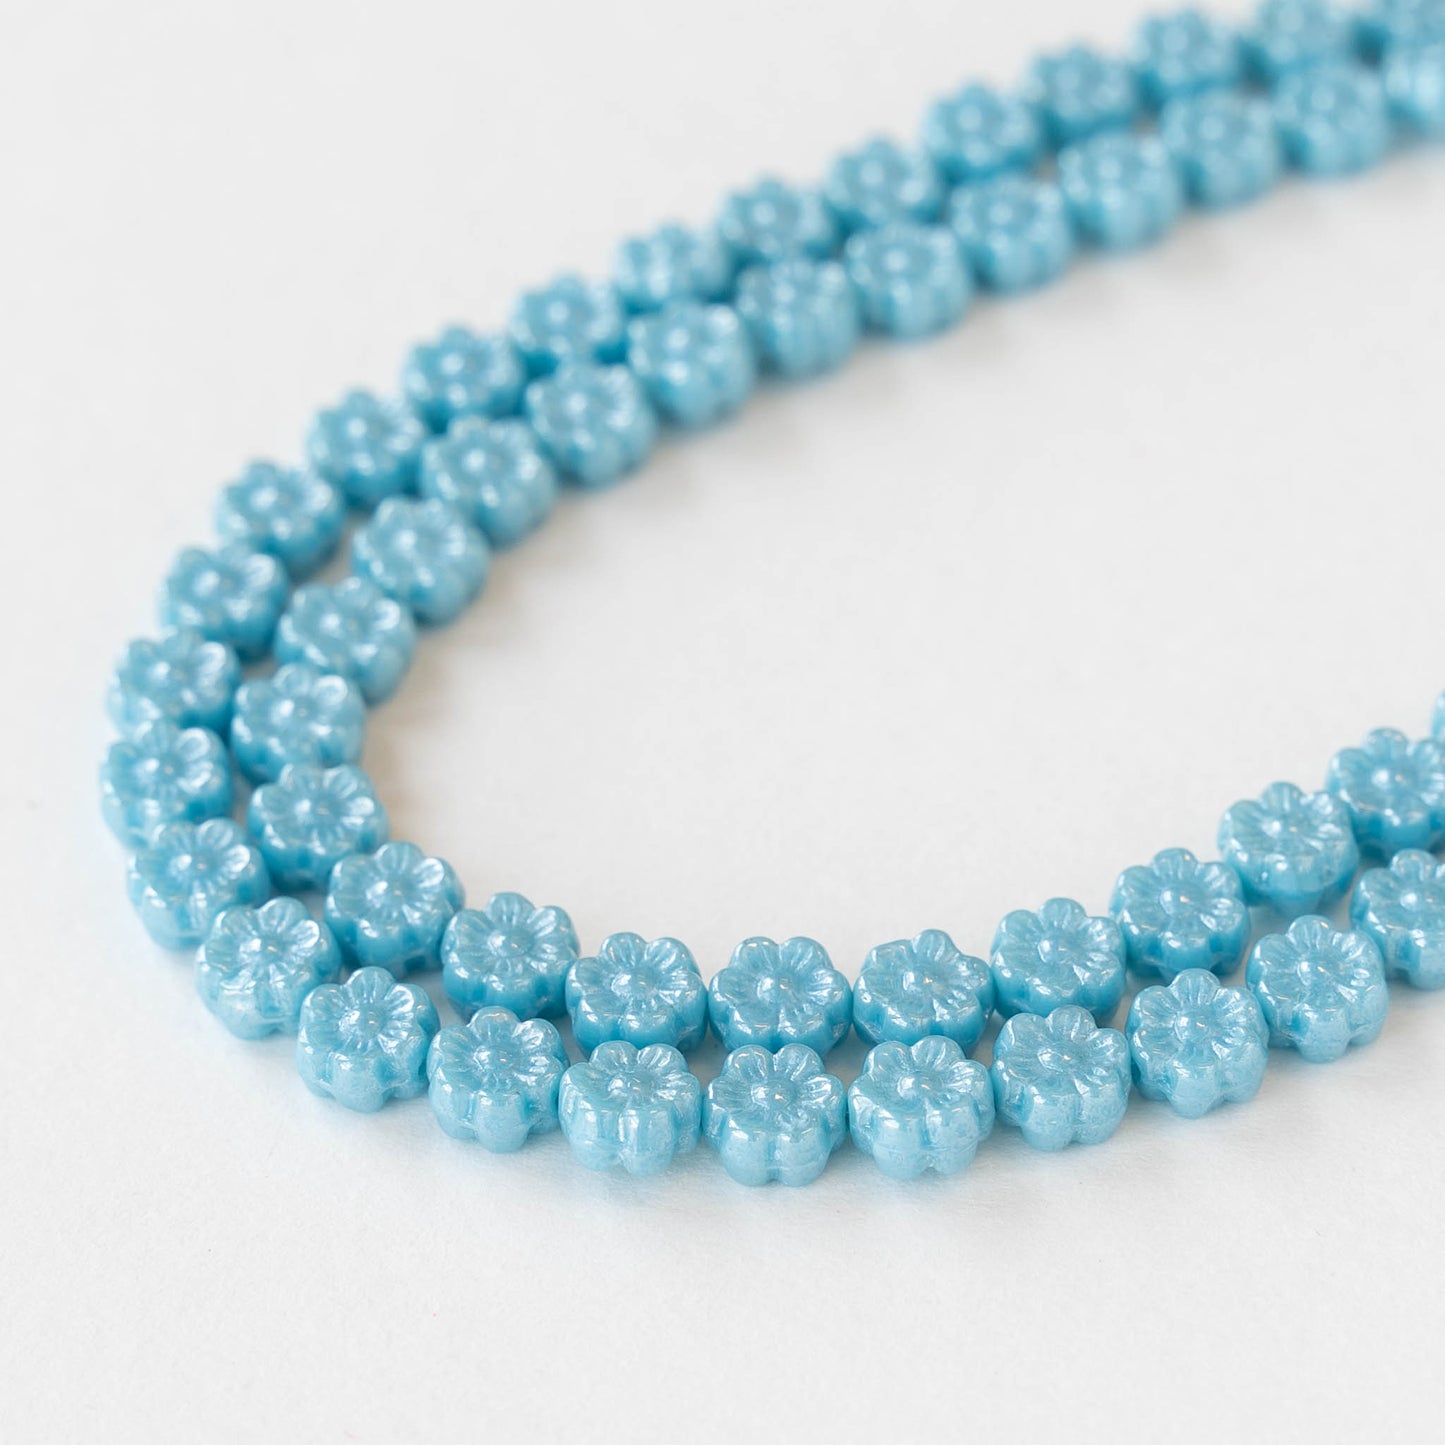 6mm Glass Flower Beads - Opaque Blue Luster - 30 beads